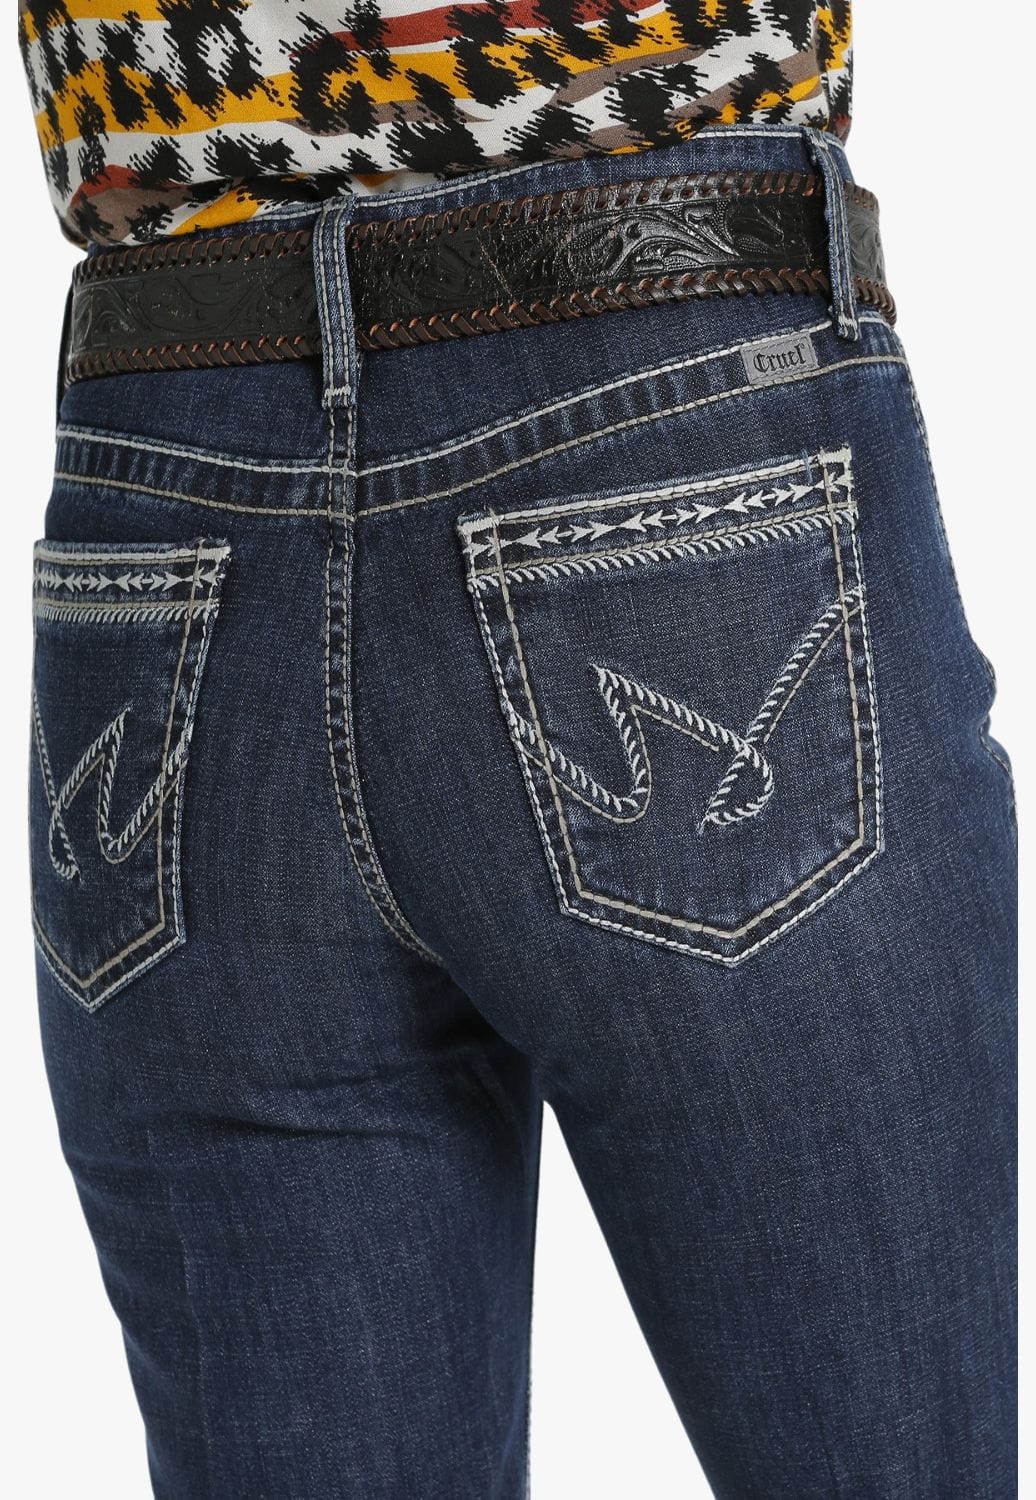 Ariat MidRise Trouser Jeans for Ladies  Cabelas